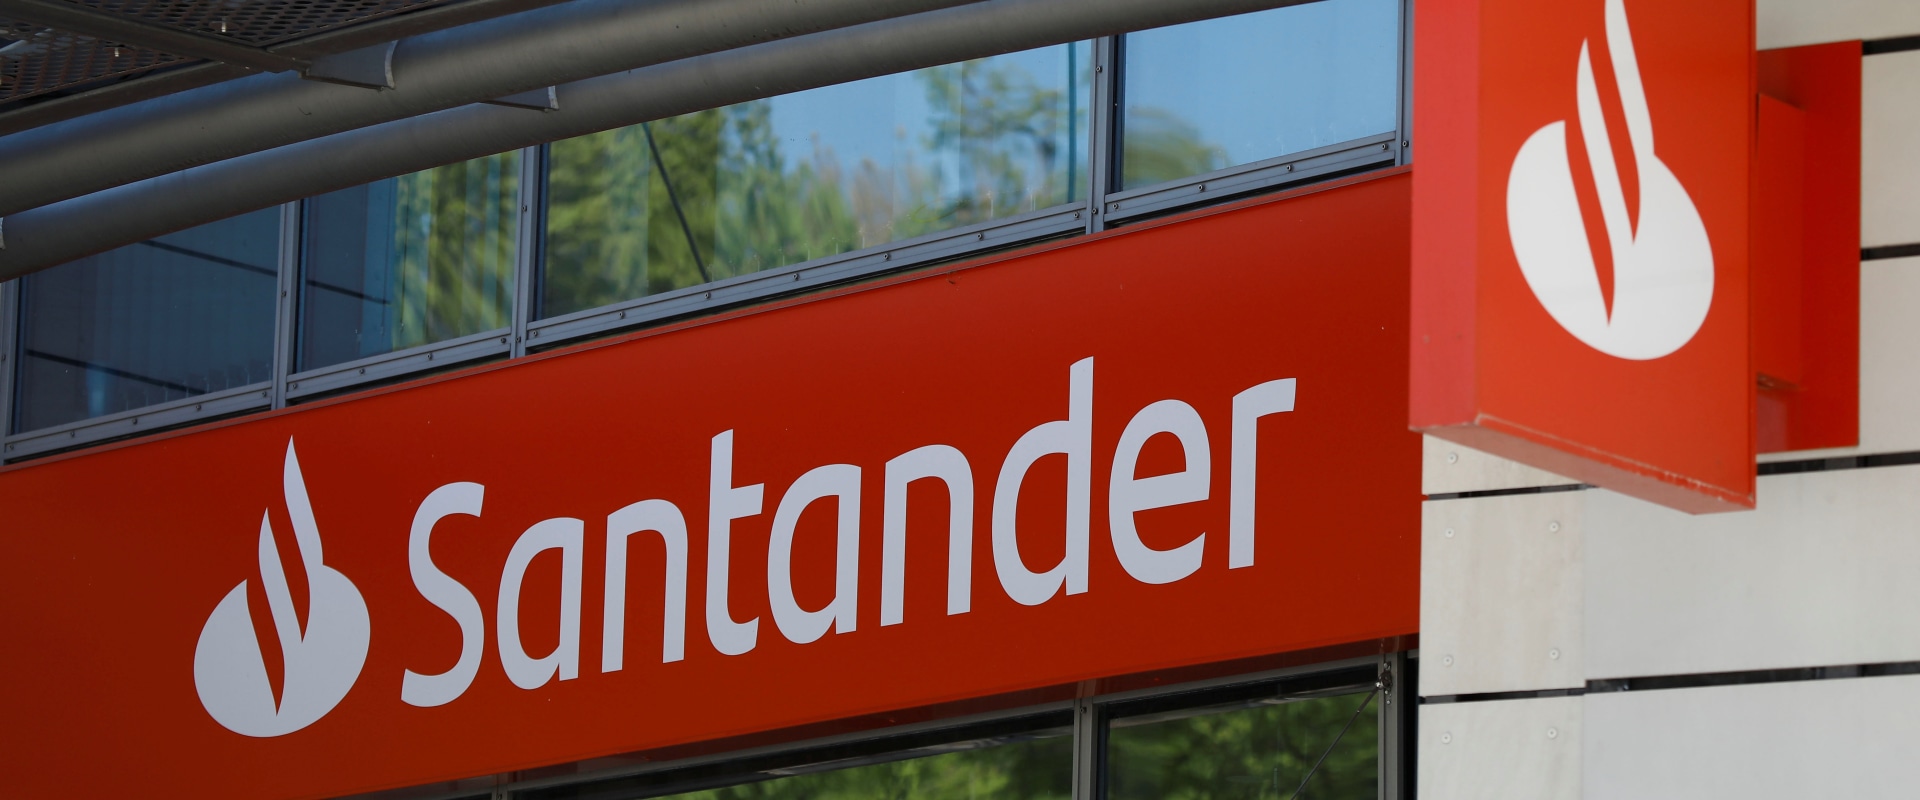 Santander Tracker Mortgage Deals Explained